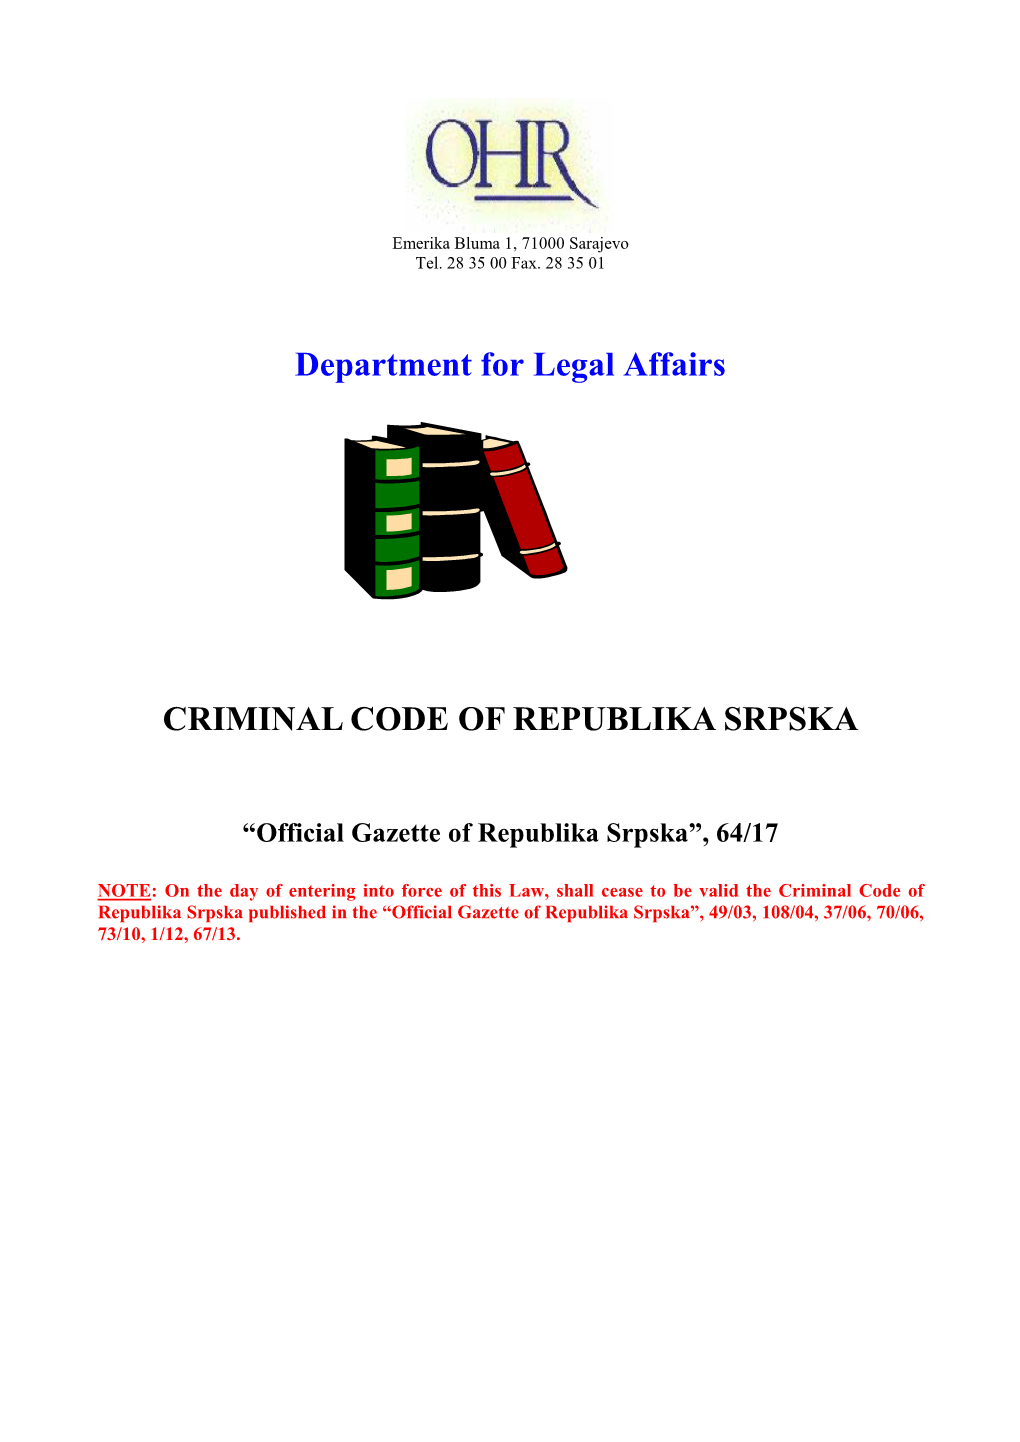 The Criminal Code of Republika Srpska Published in the “Official Gazette of Republika Srpska”, 49/03, 108/04, 37/06, 70/06, 73/10, 1/12, 67/13